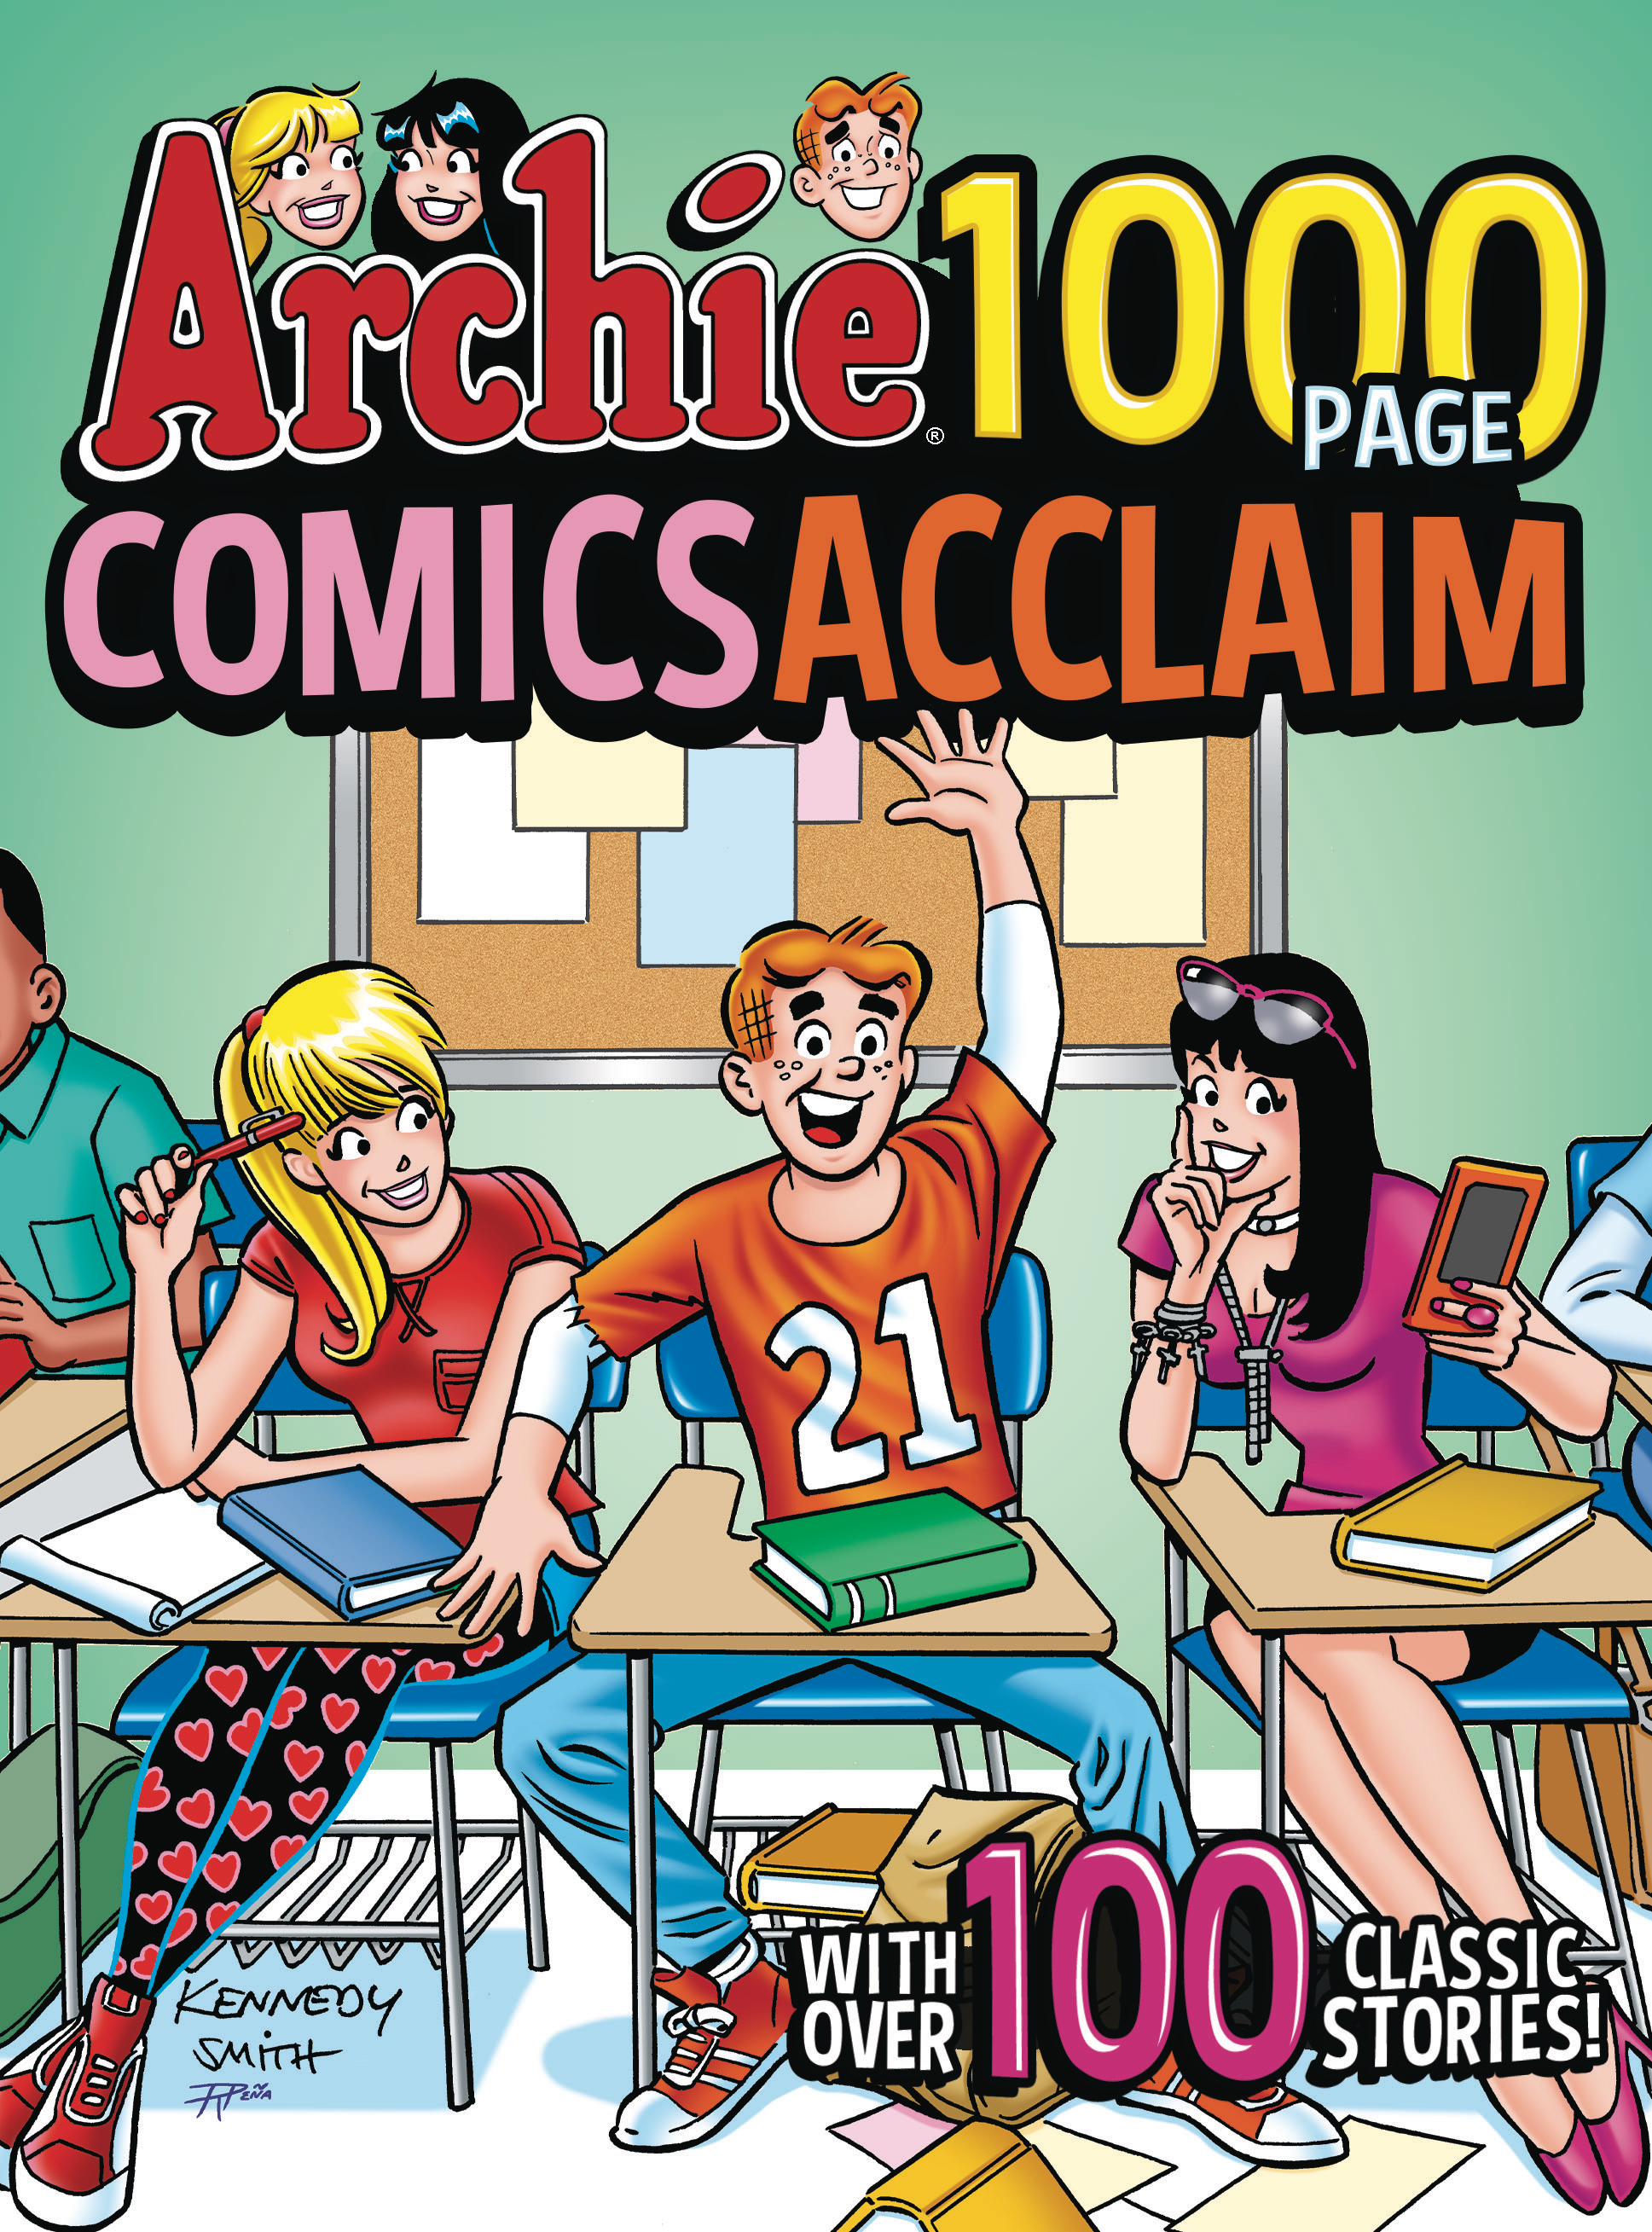 Archie 1000 Page Comics Acclaim Graphic Novel